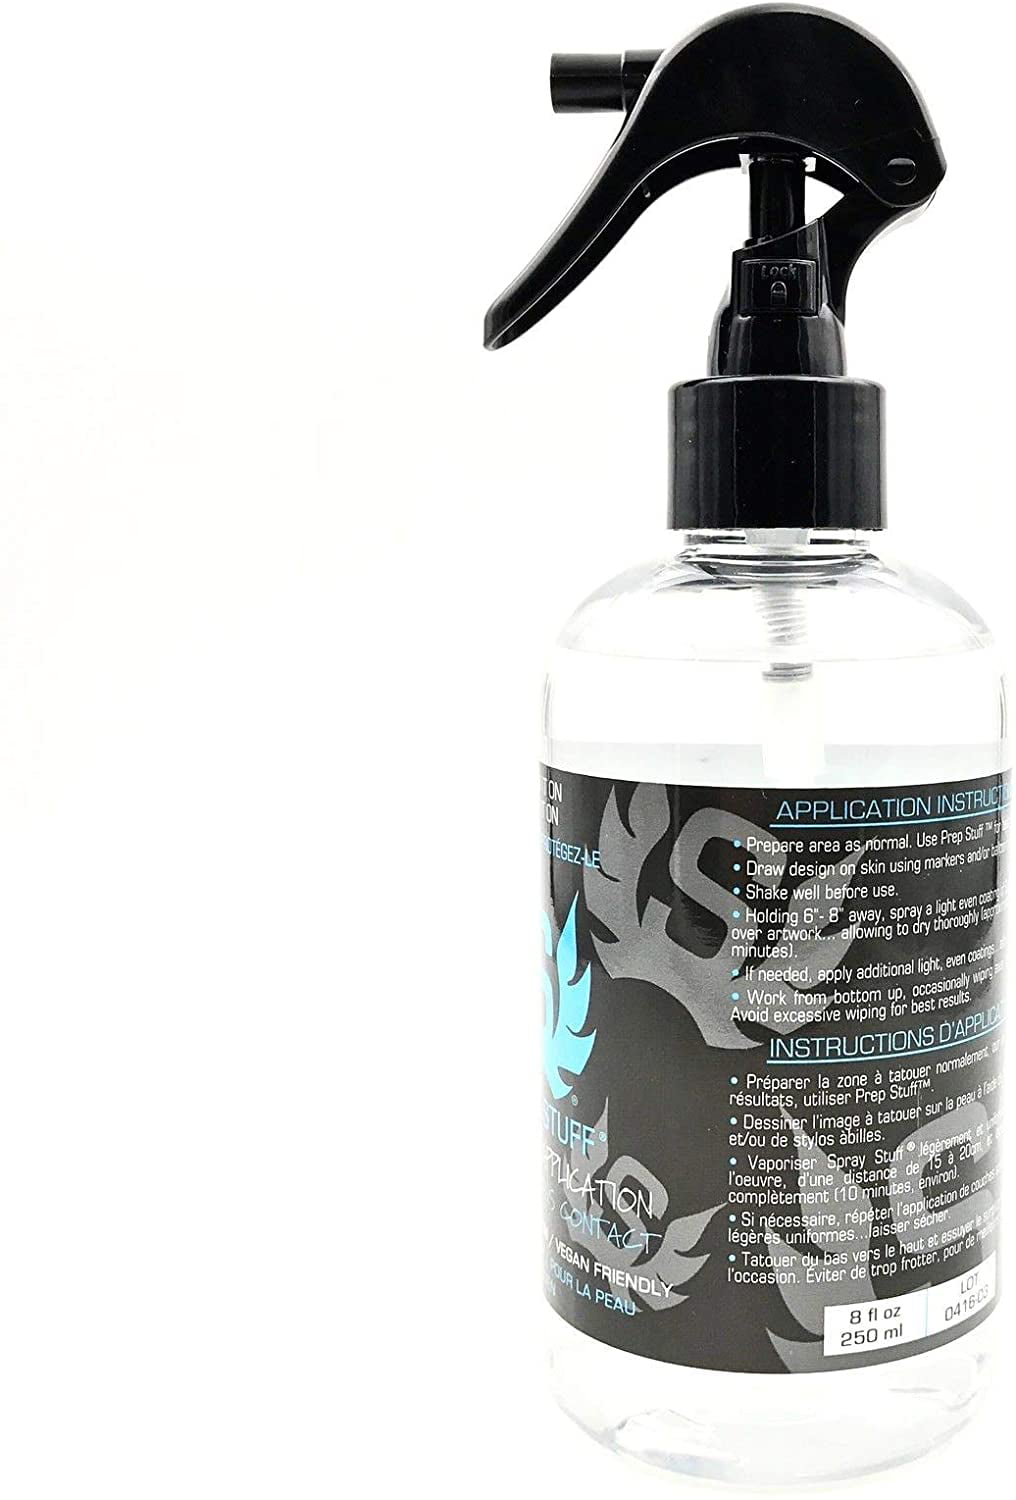 Spray Stuff 8oz Bottle – Ultimate Tattoo Supply